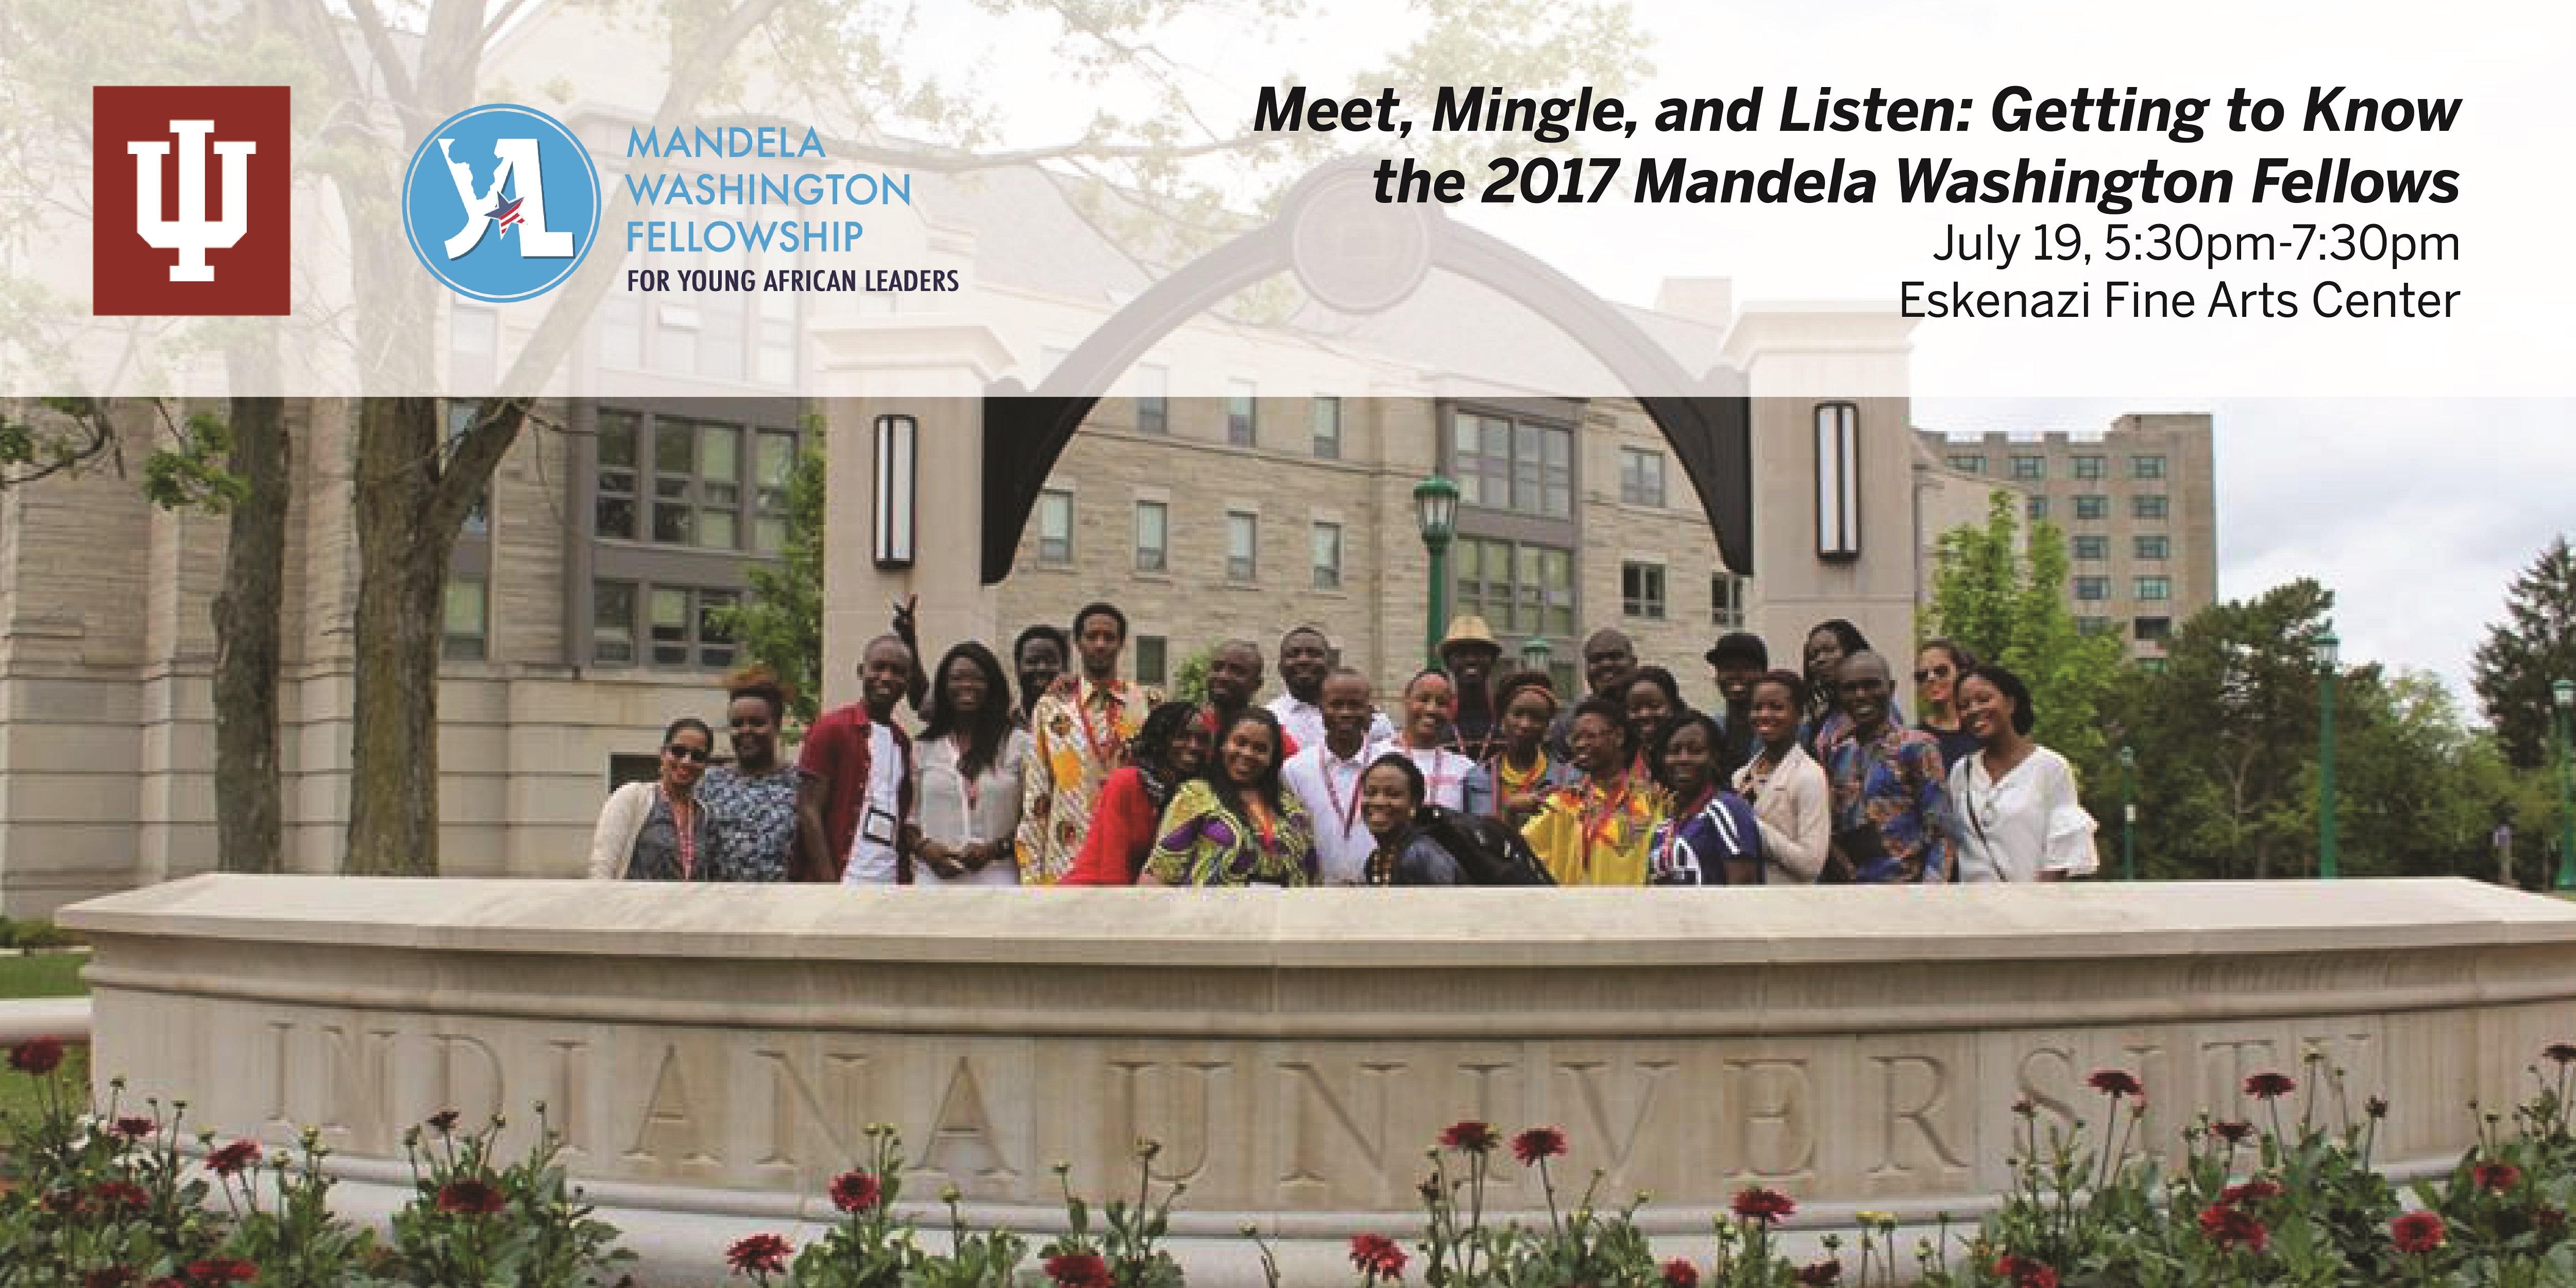 Meet, Mingle, and Listen: Getting to Know the 2017 Mandela Washington Fellows